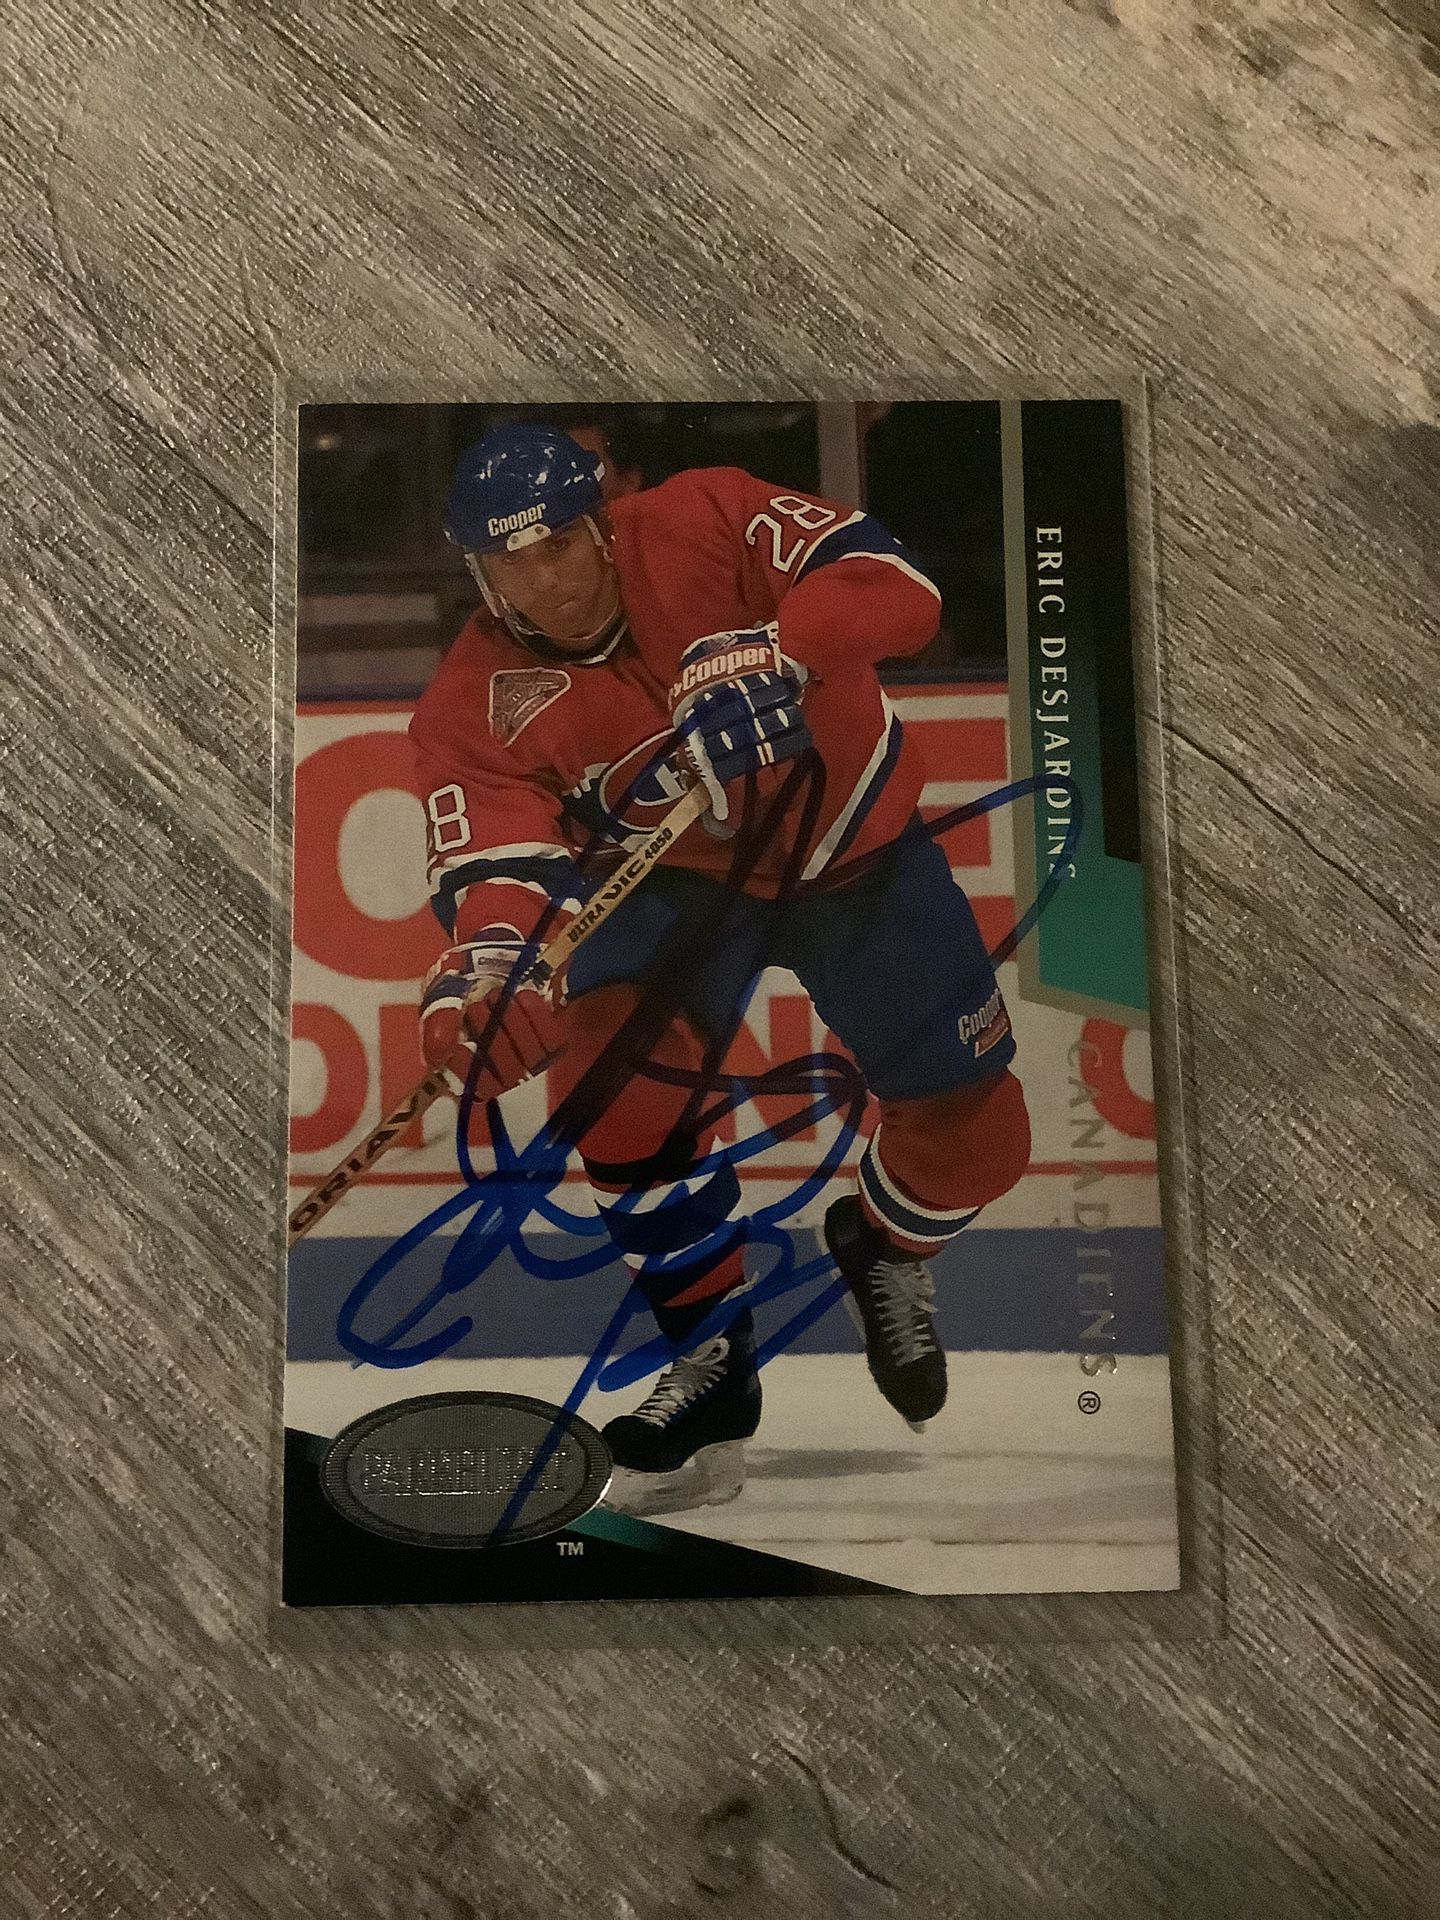 Eric Desjardins Canadians Signed Card